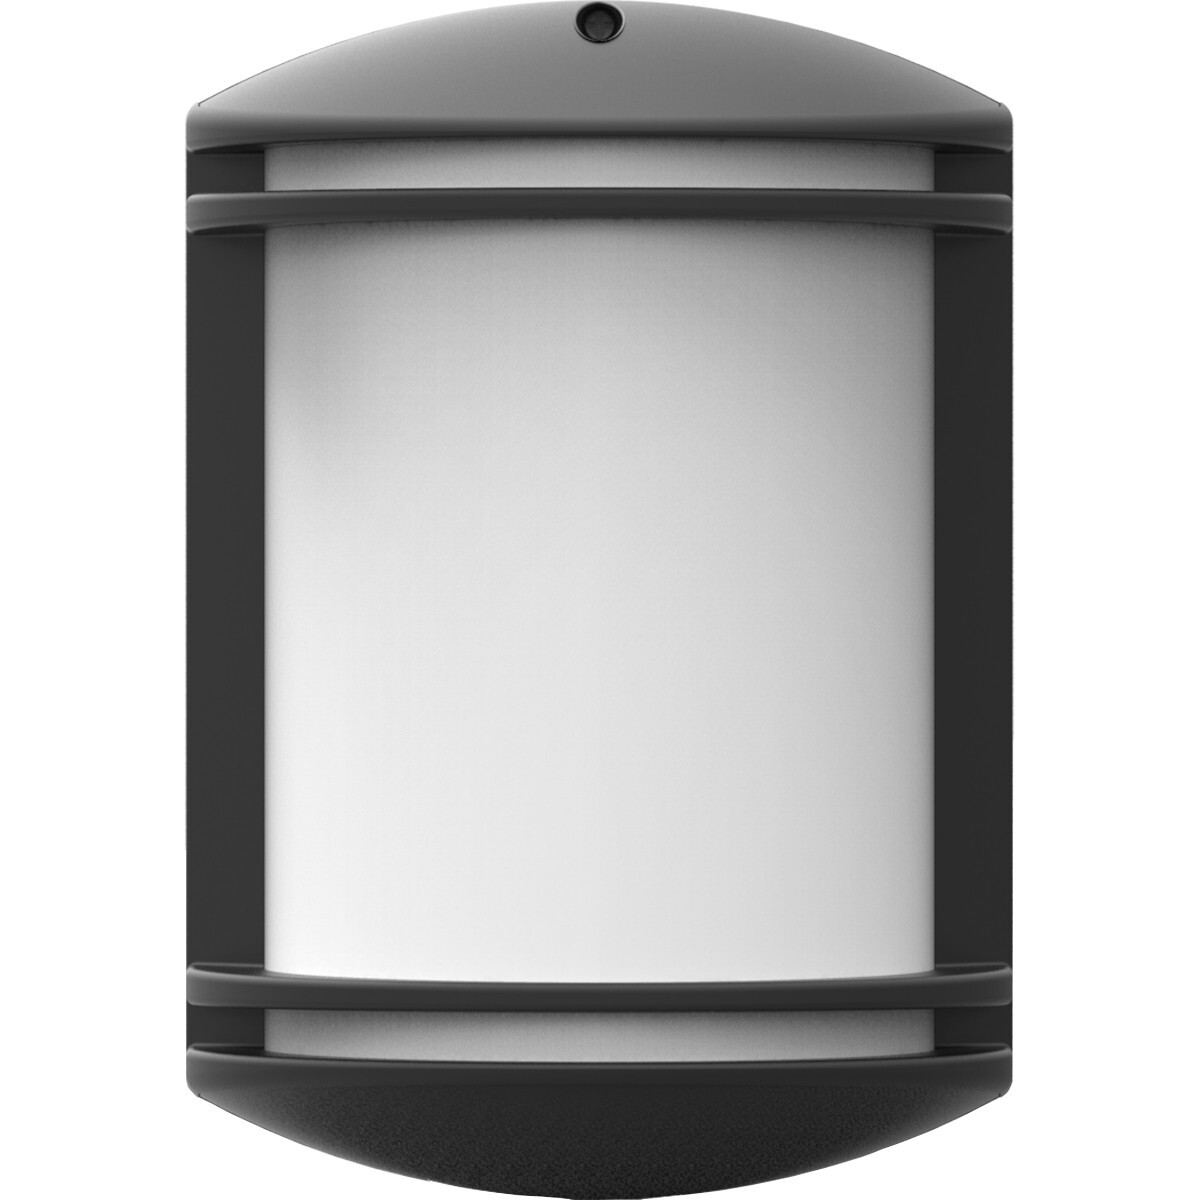 LED Tuinverlichting - Wandlamp - Achina 4 - Kunststof Mat Zwart - E27 Fitting - Ovaal